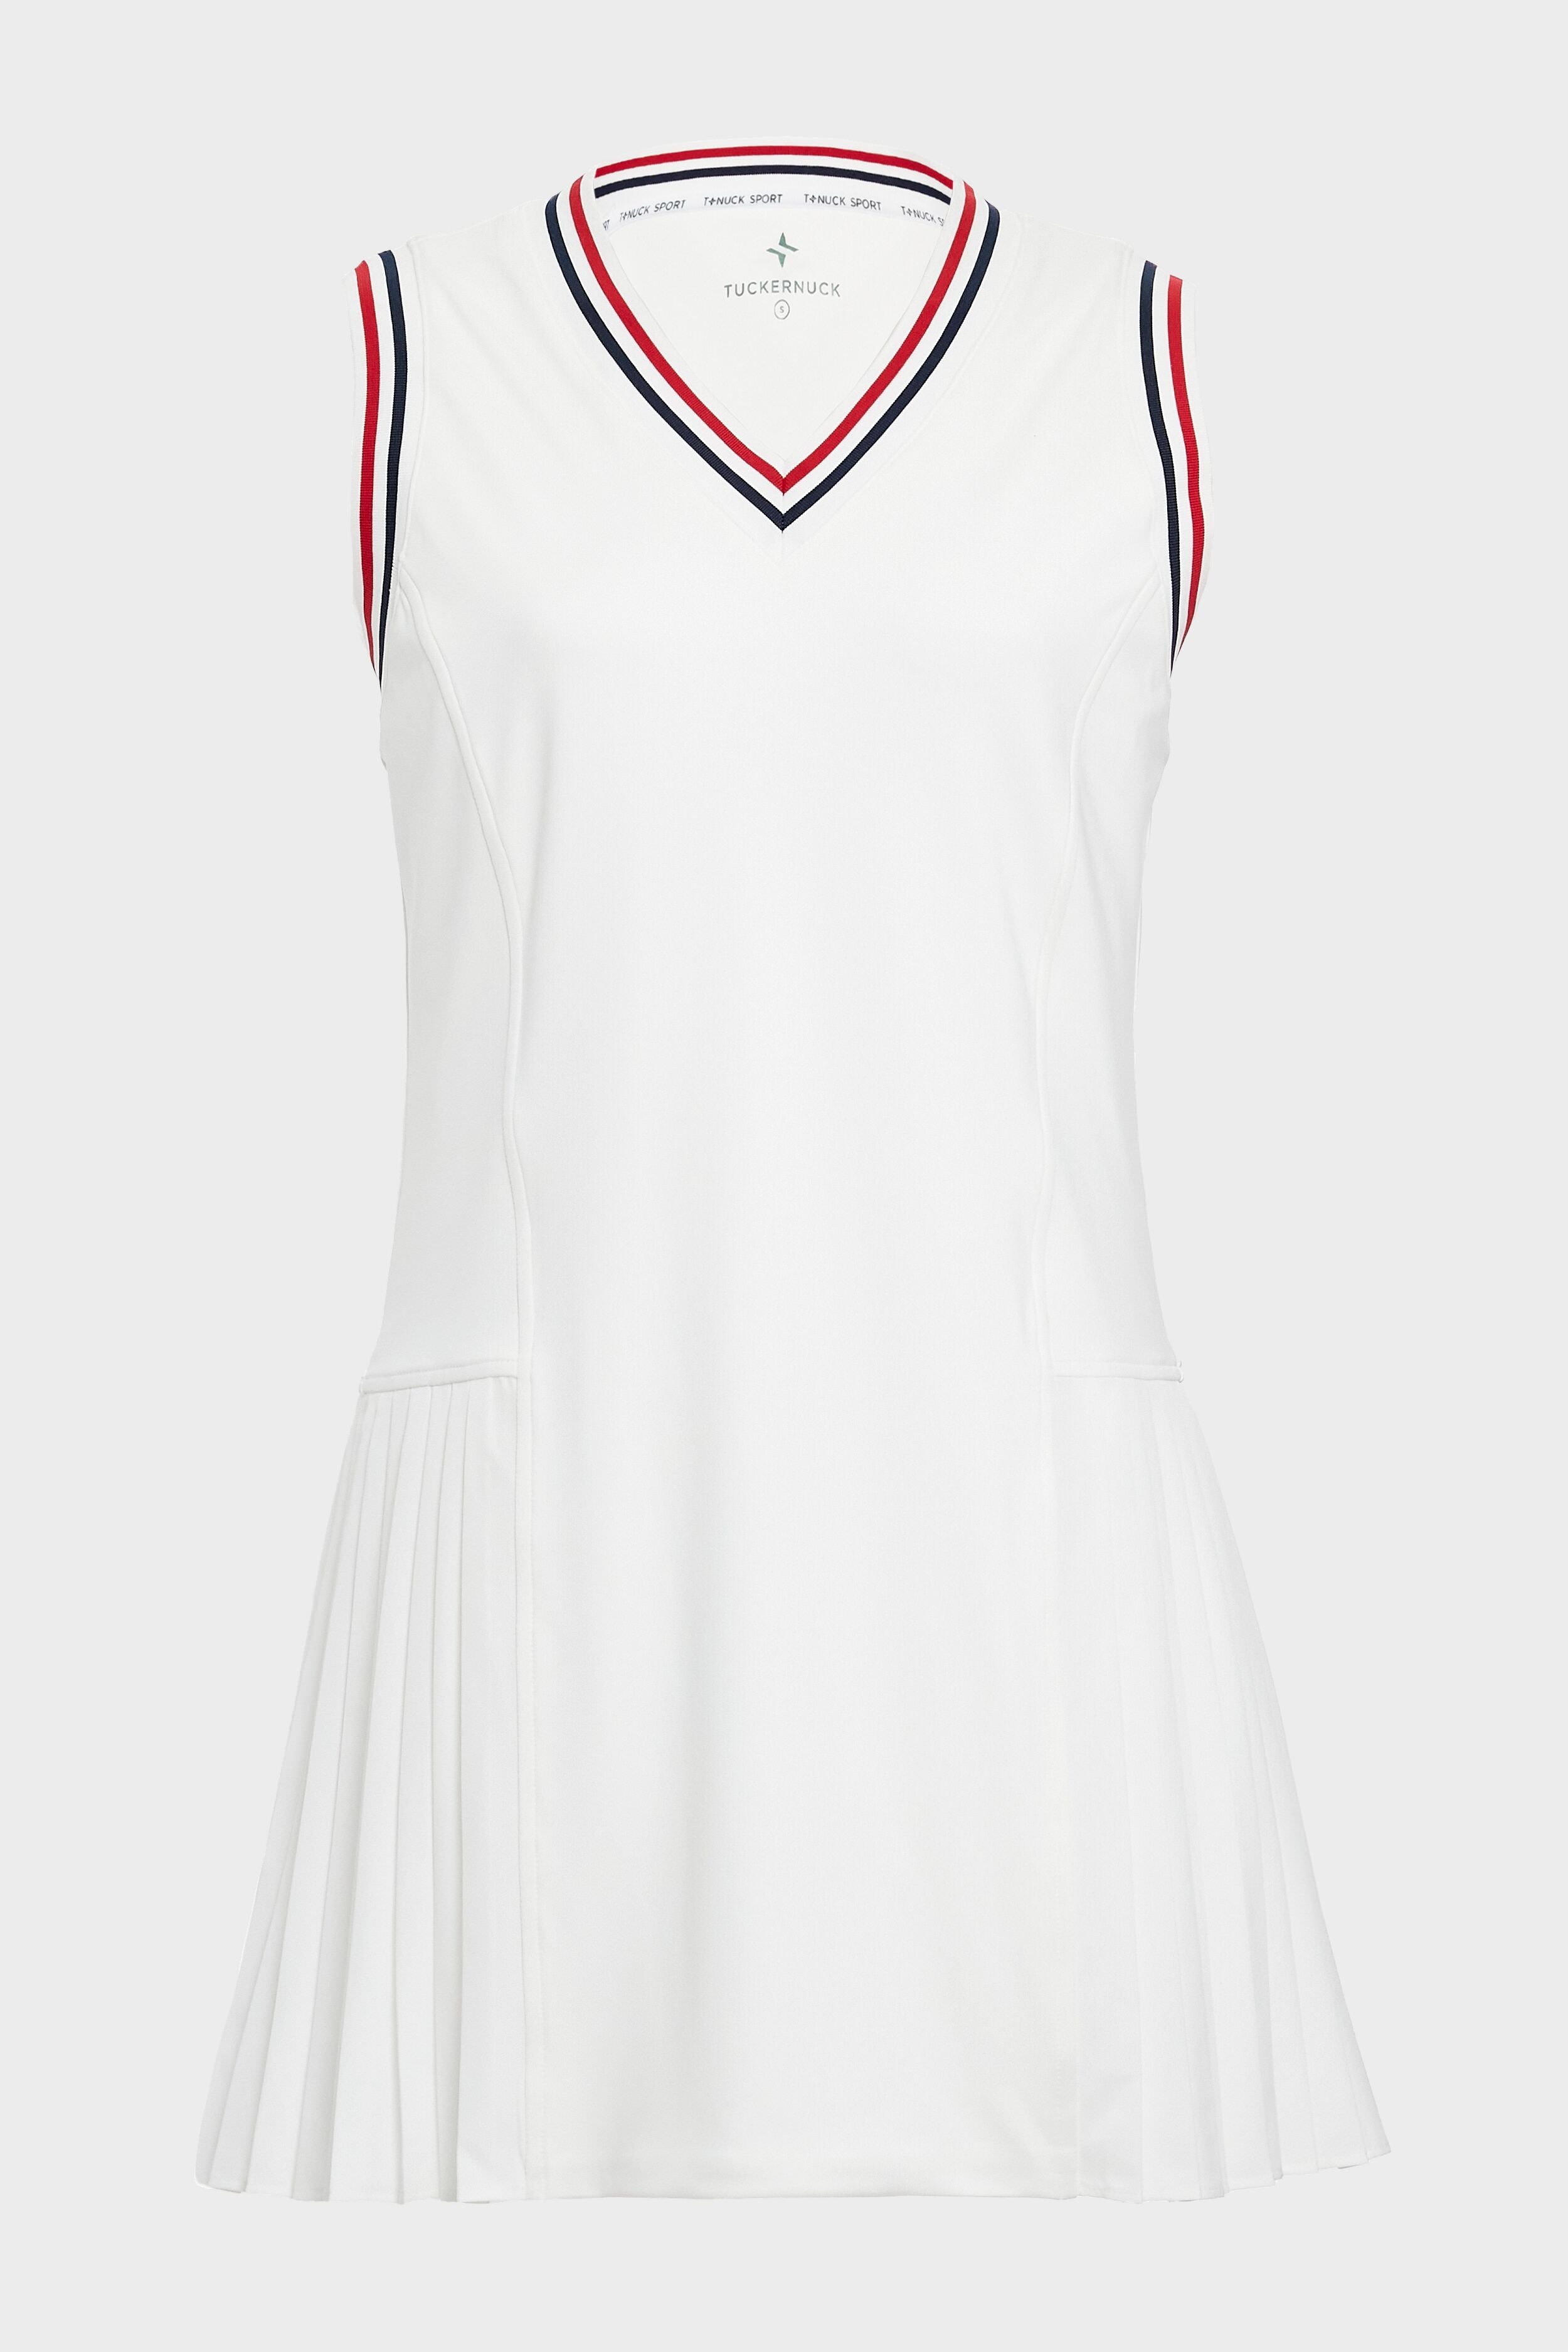 Americana Stripe Kemper Tennis Dress